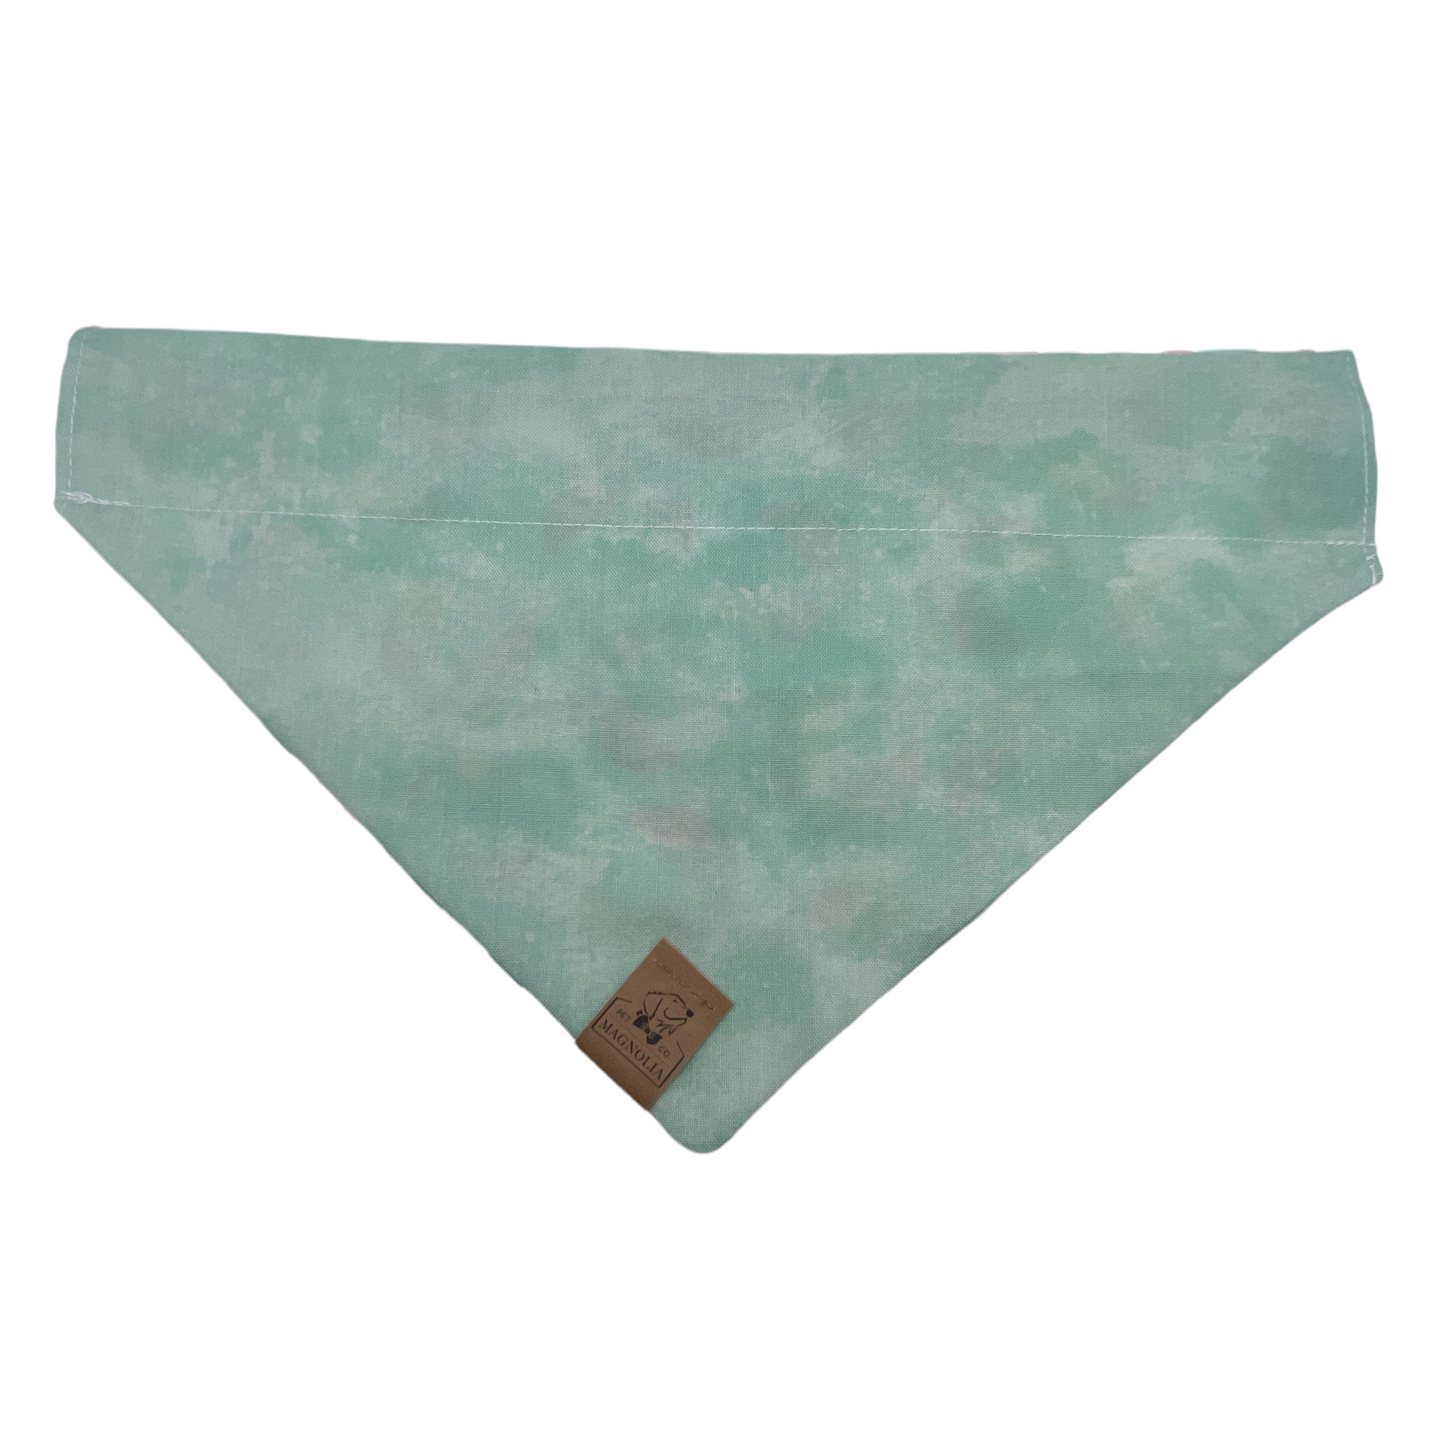 Aqua dog bandana, slip-on, reversible to Beach ball print